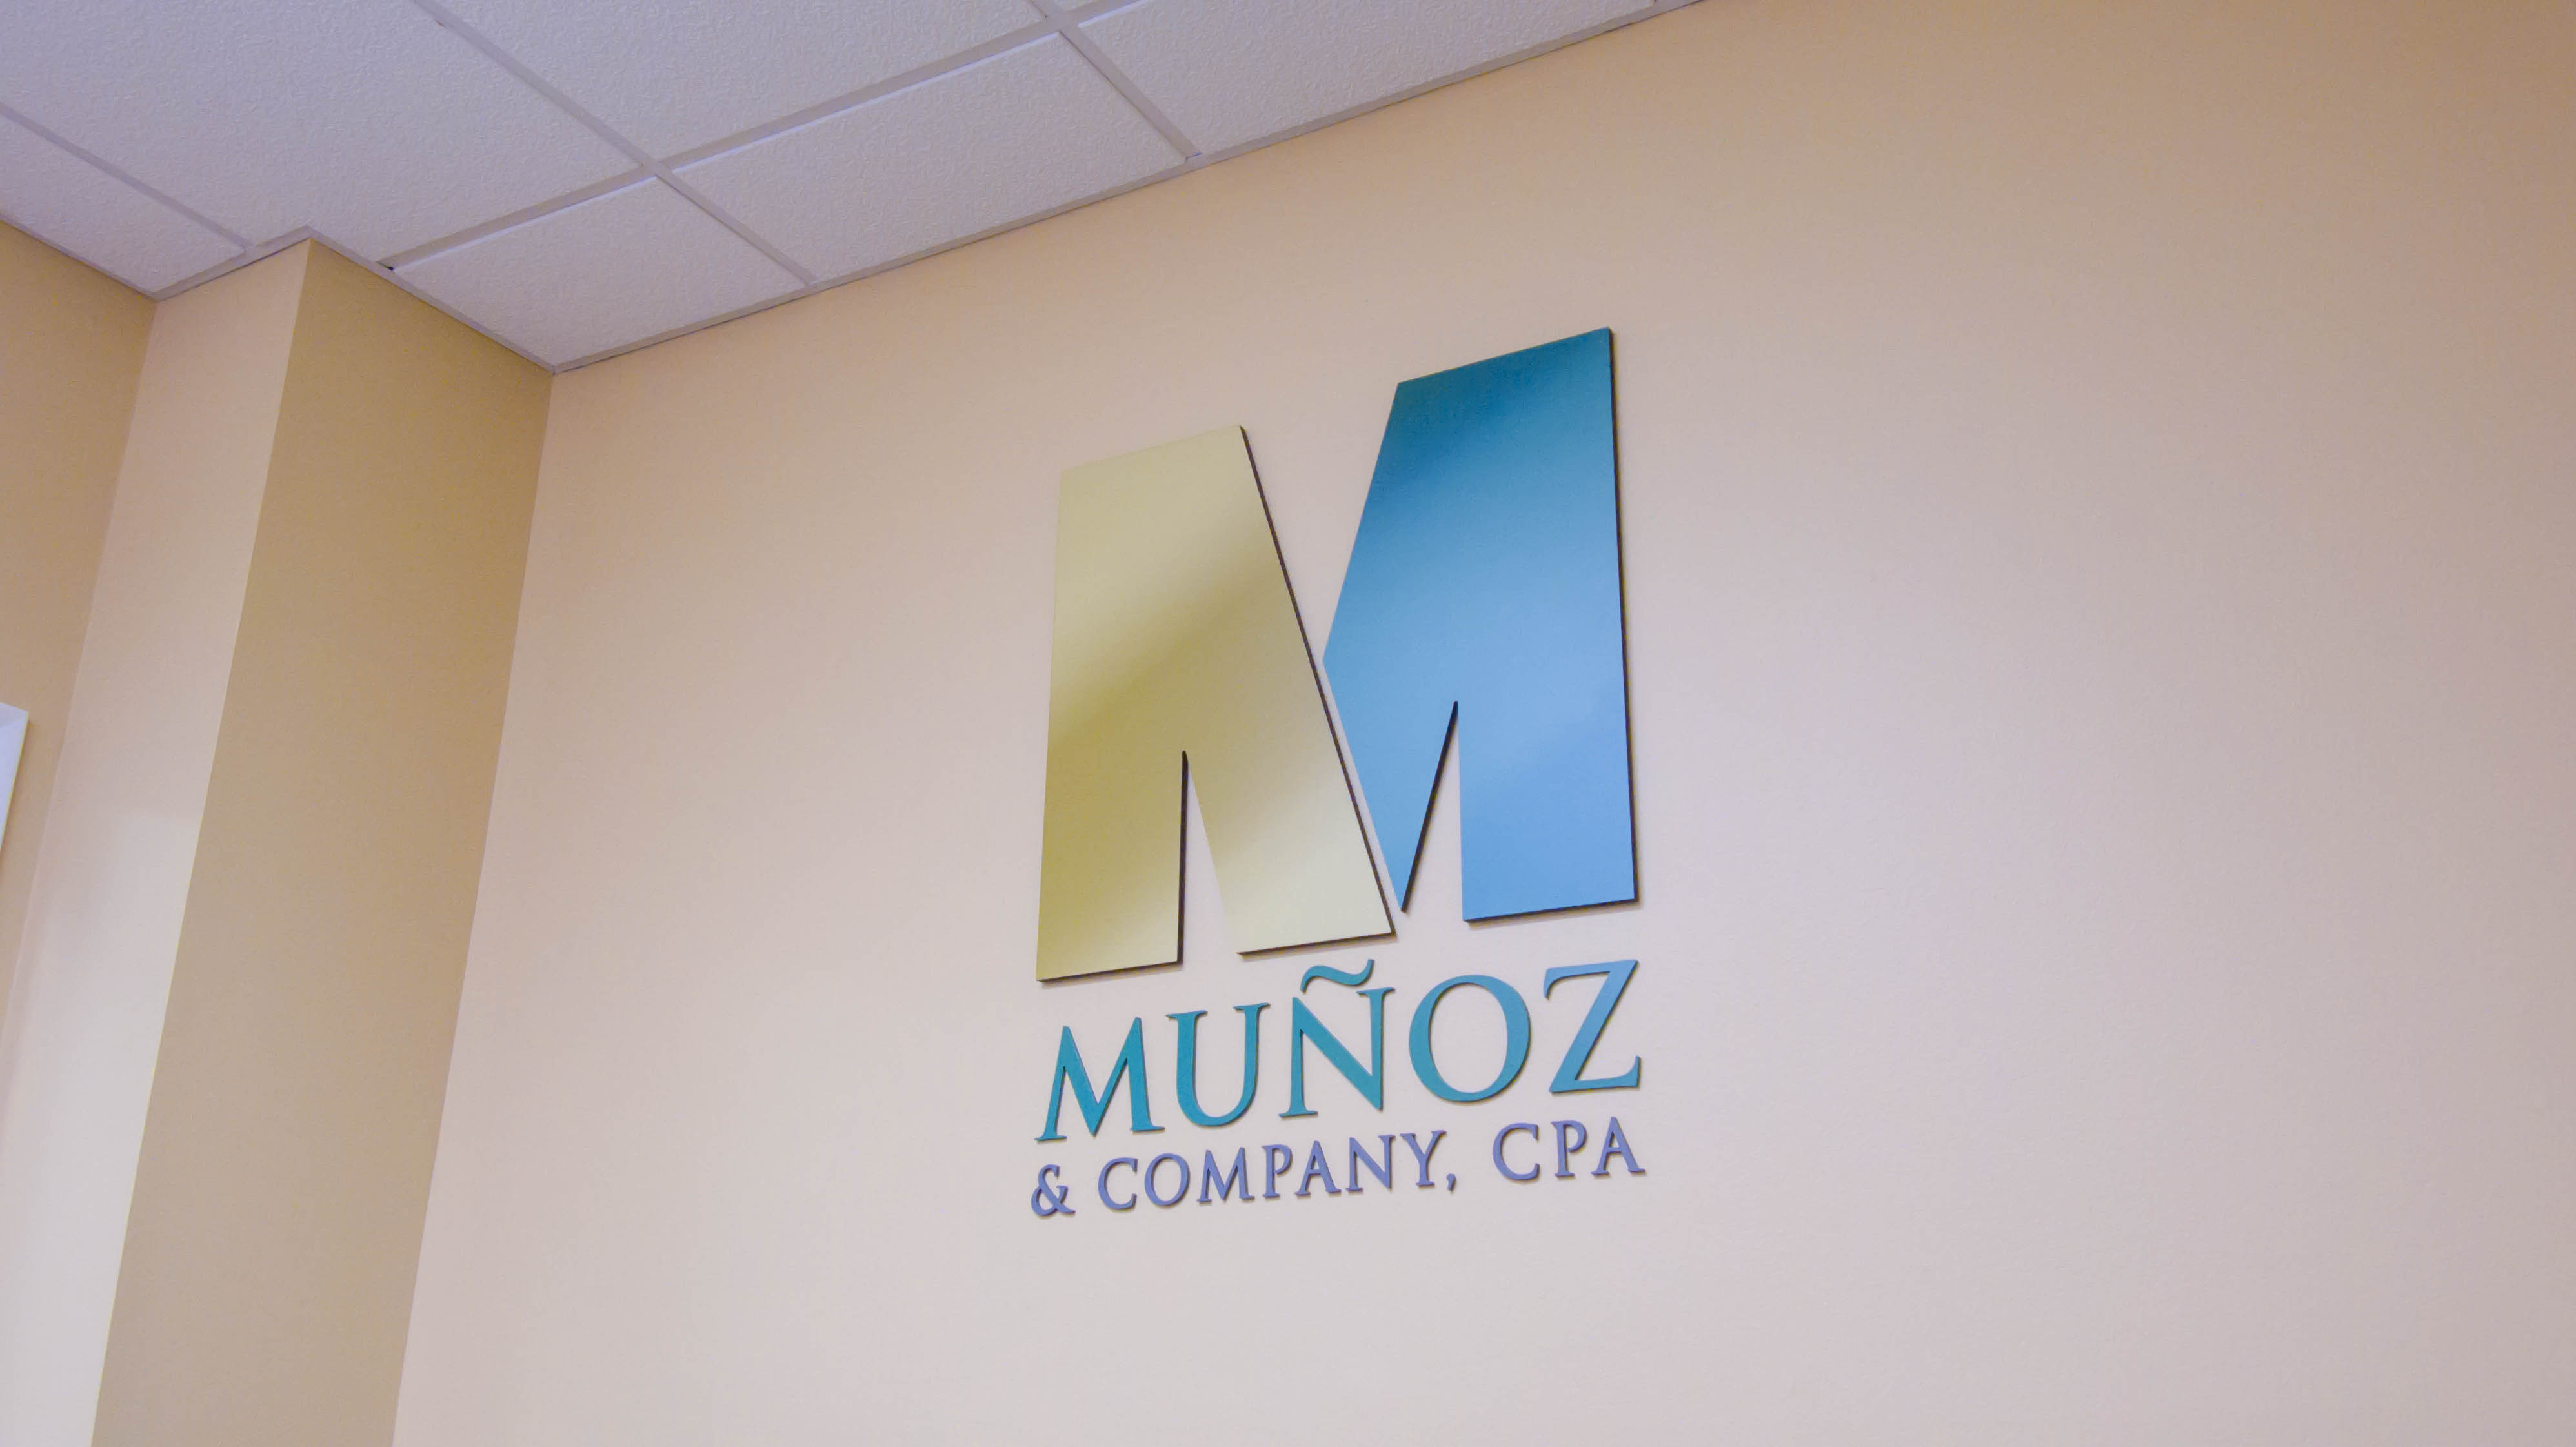 Munoz & Company logo sign on a beige wall